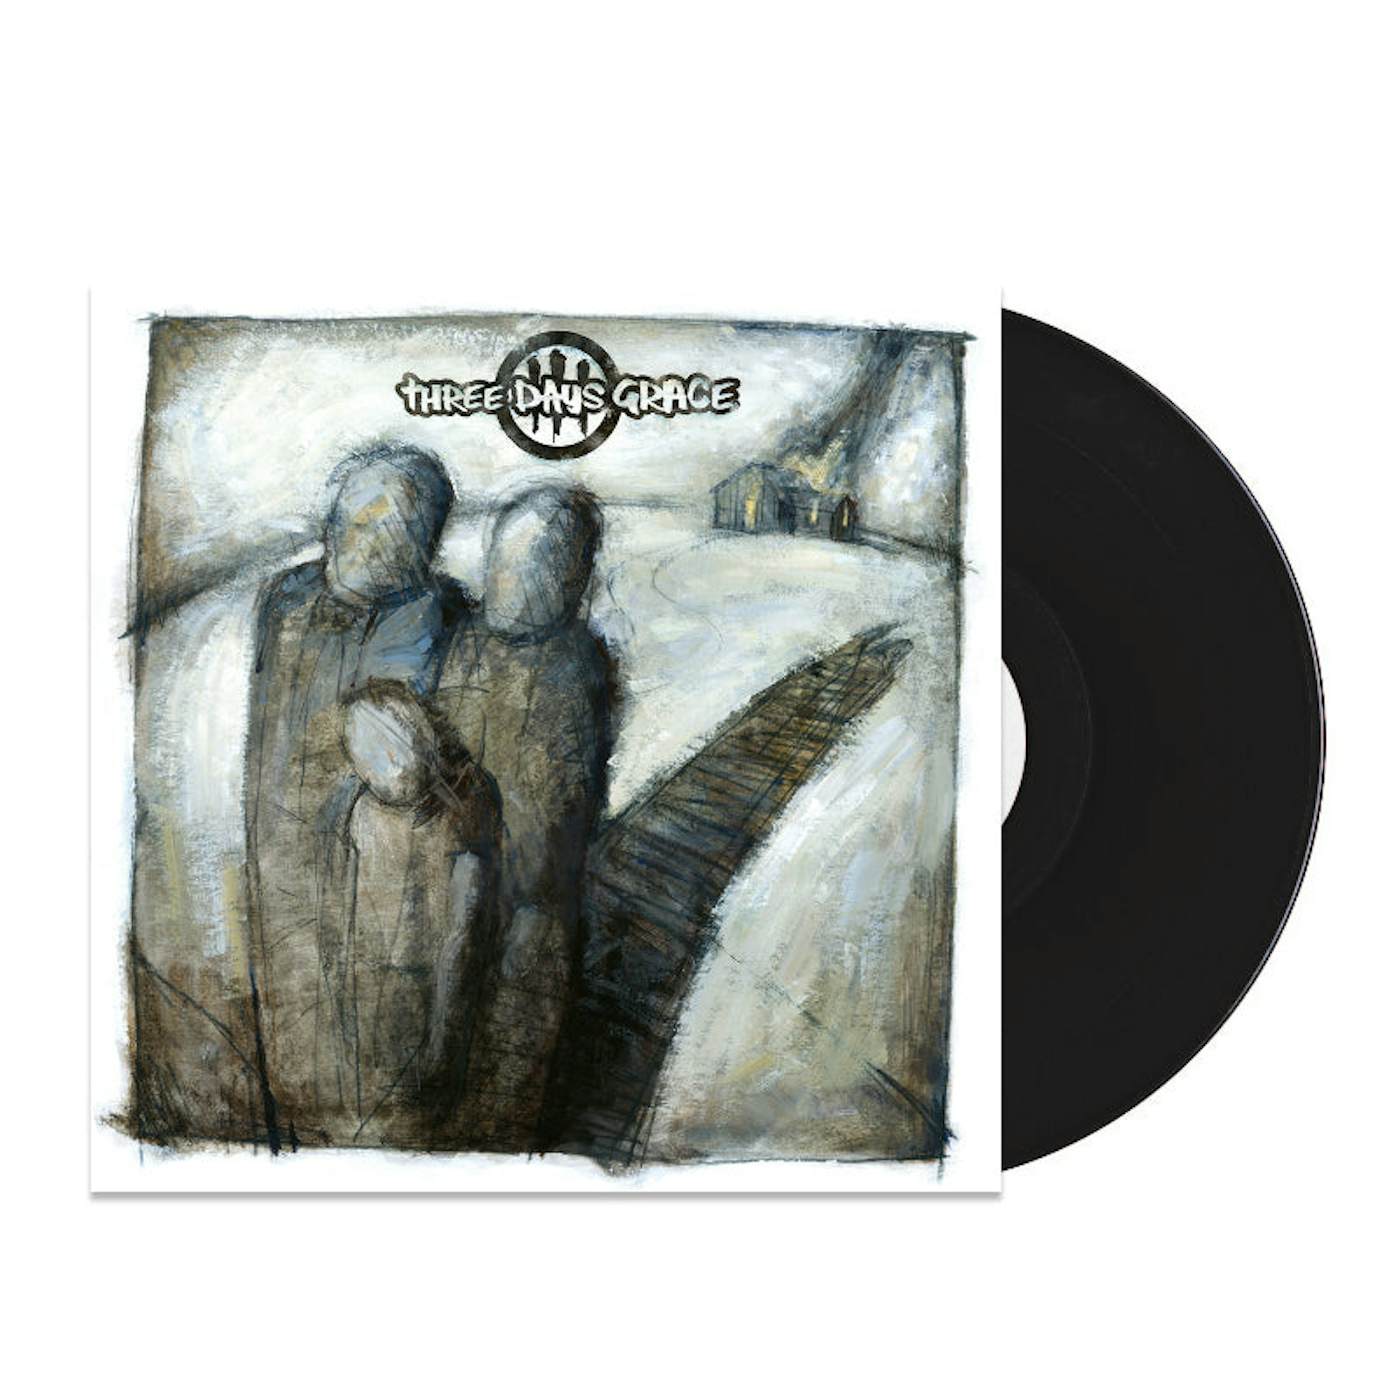 Three Days Grace Album On Vinyl